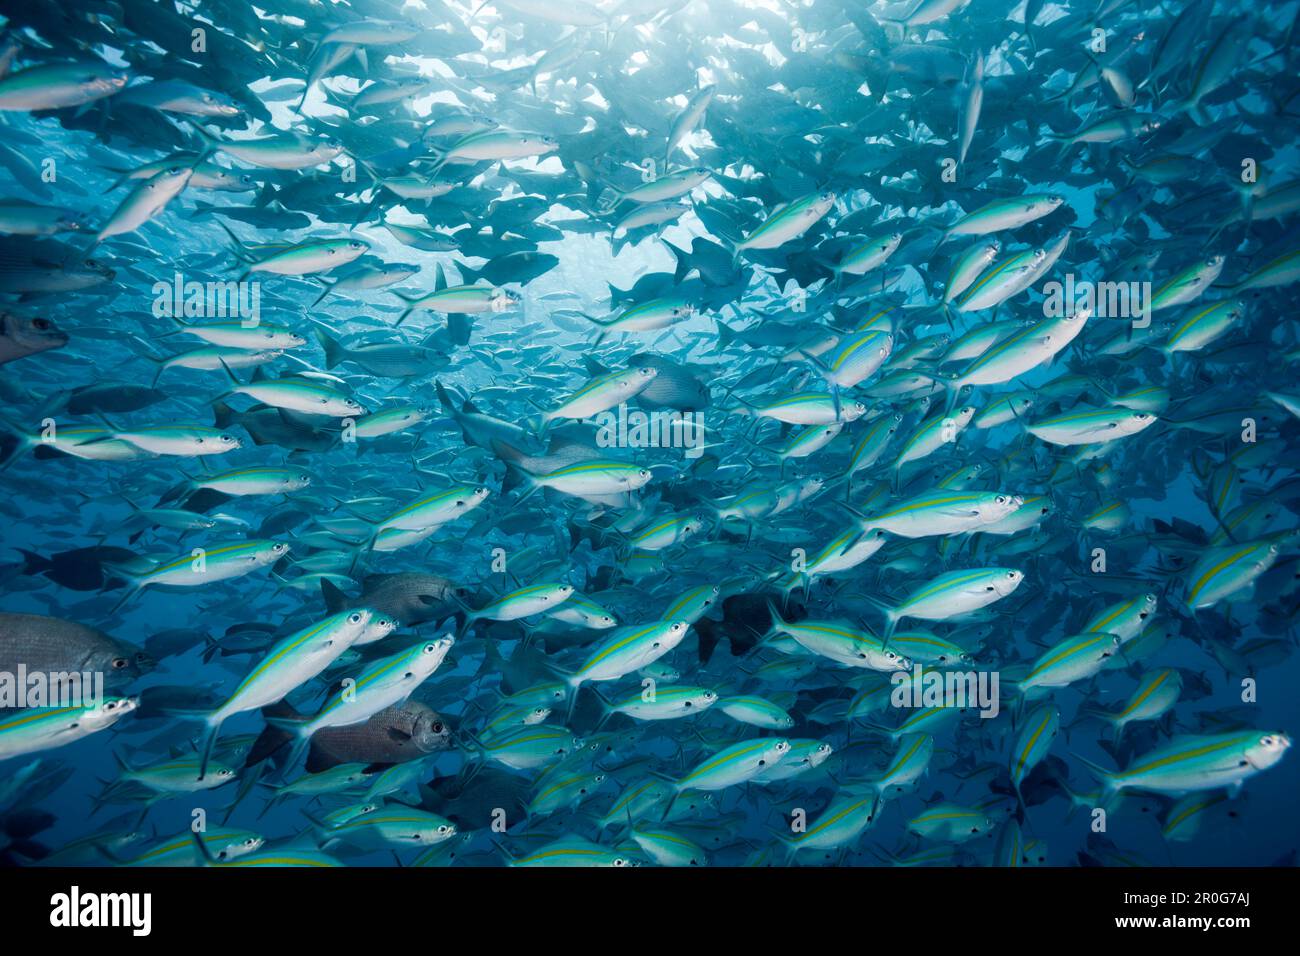 Schooling Rudderfish and Gold-banded Fusiliers, Kyphosus cinerascens, Caesio caerulaurea, German Channel, Micronesia, Palau Stock Photo